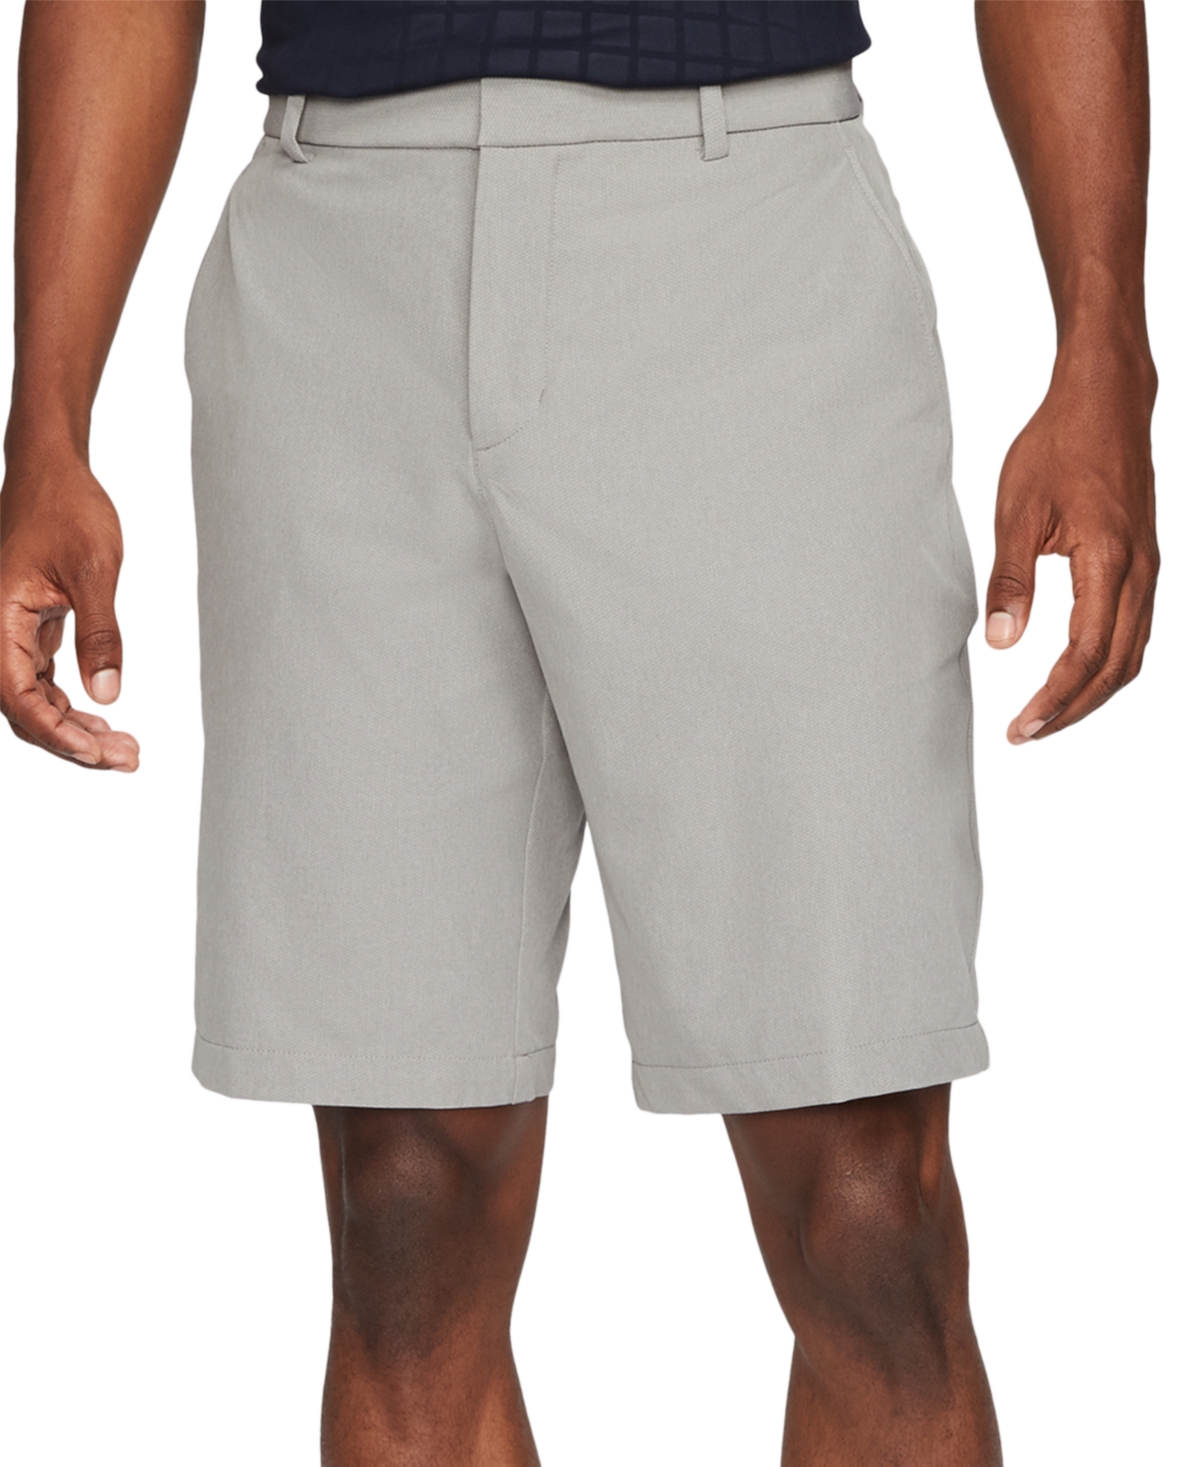 UPC 194501221252 product image for Nike Men's Dri-fit Hybrid Golf Shorts | upcitemdb.com